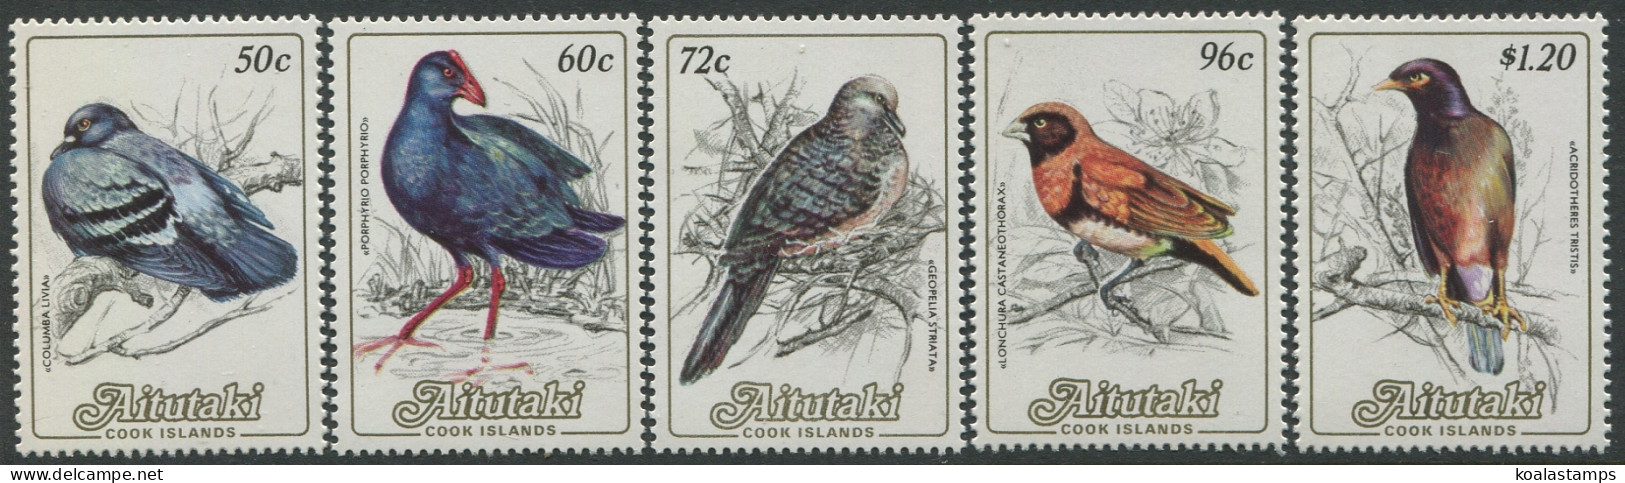 Aitutaki 1984 SG485-489 Birds (5) MNH - Cook